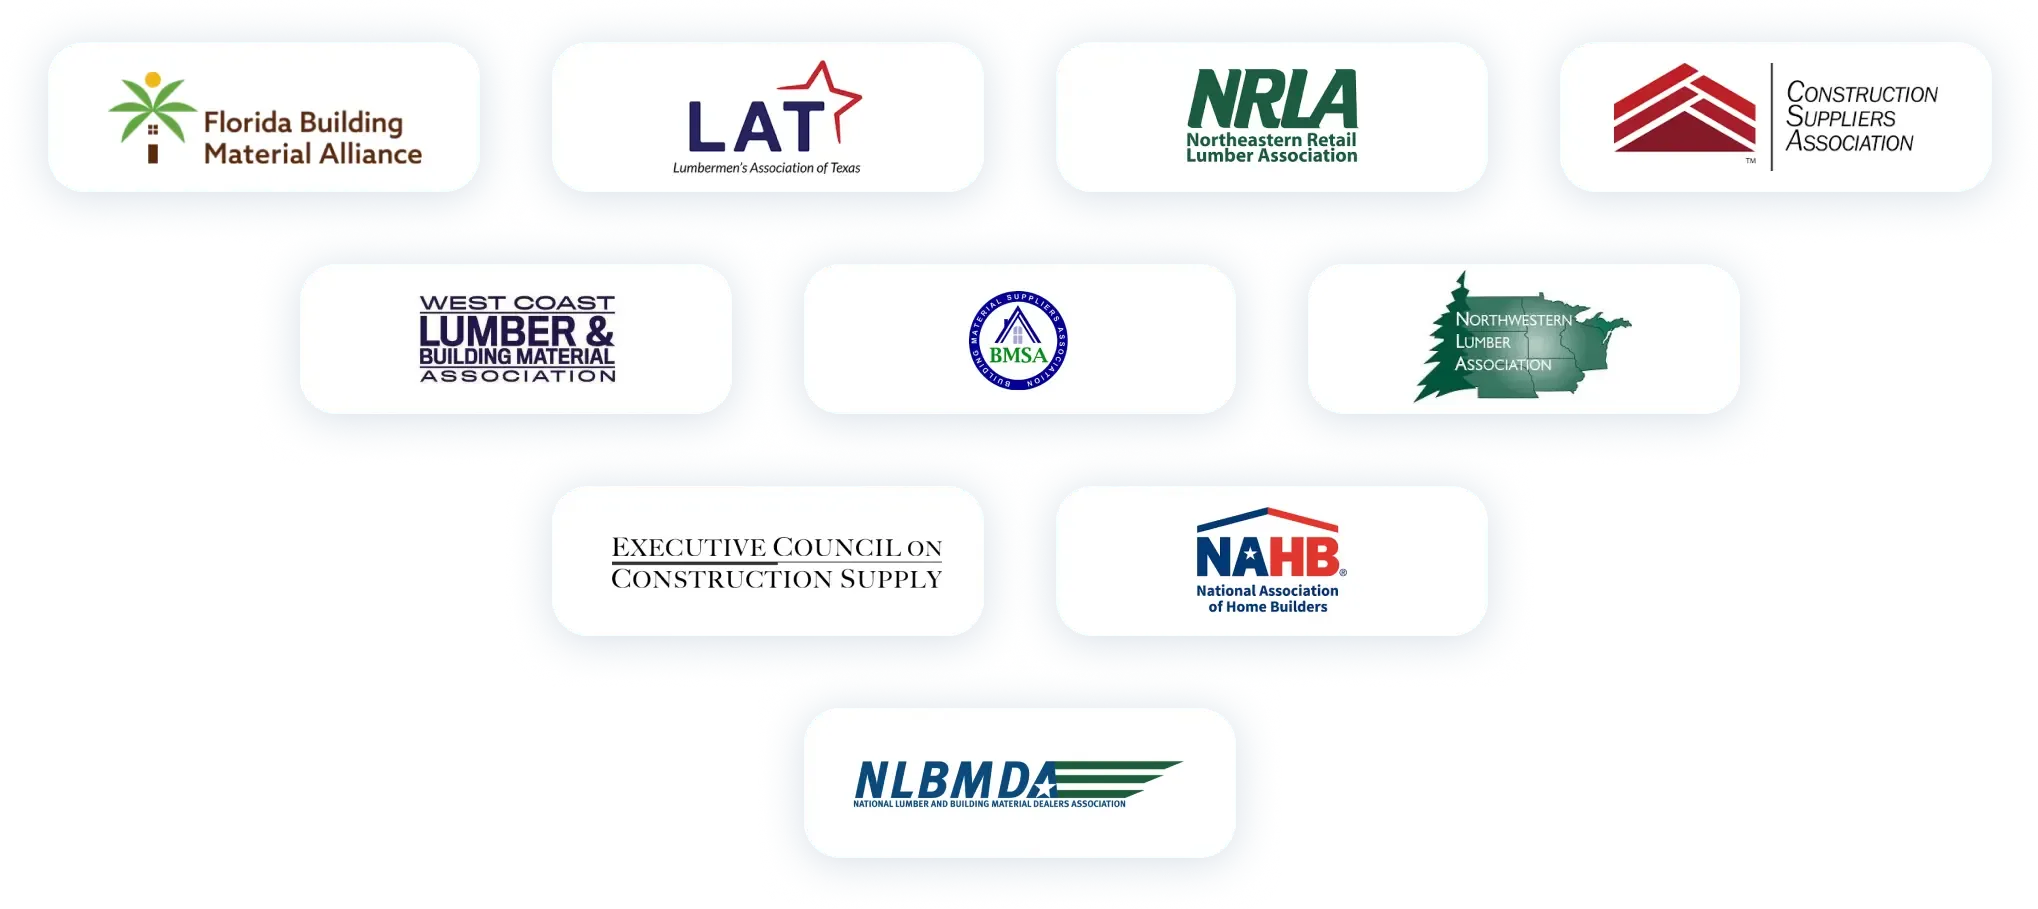 Logos of industry partners, including FBMA LAT, NRLA, CSA, WCLBMA, BMSA, NLA, ECCS, NAHB, NLBMDA